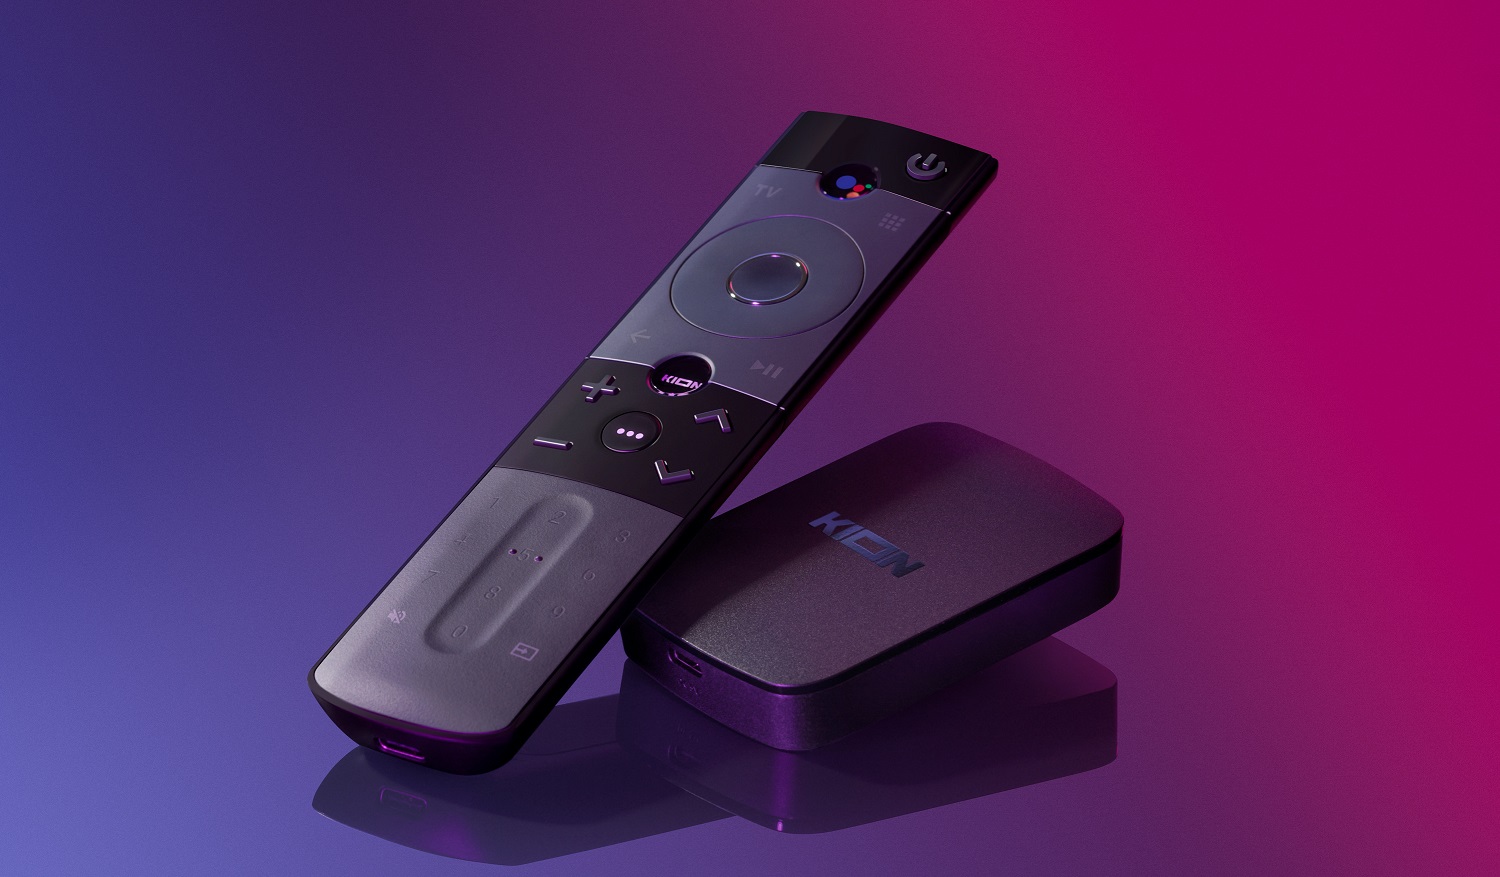 ТВ-приставка Kion Smart Box Premium